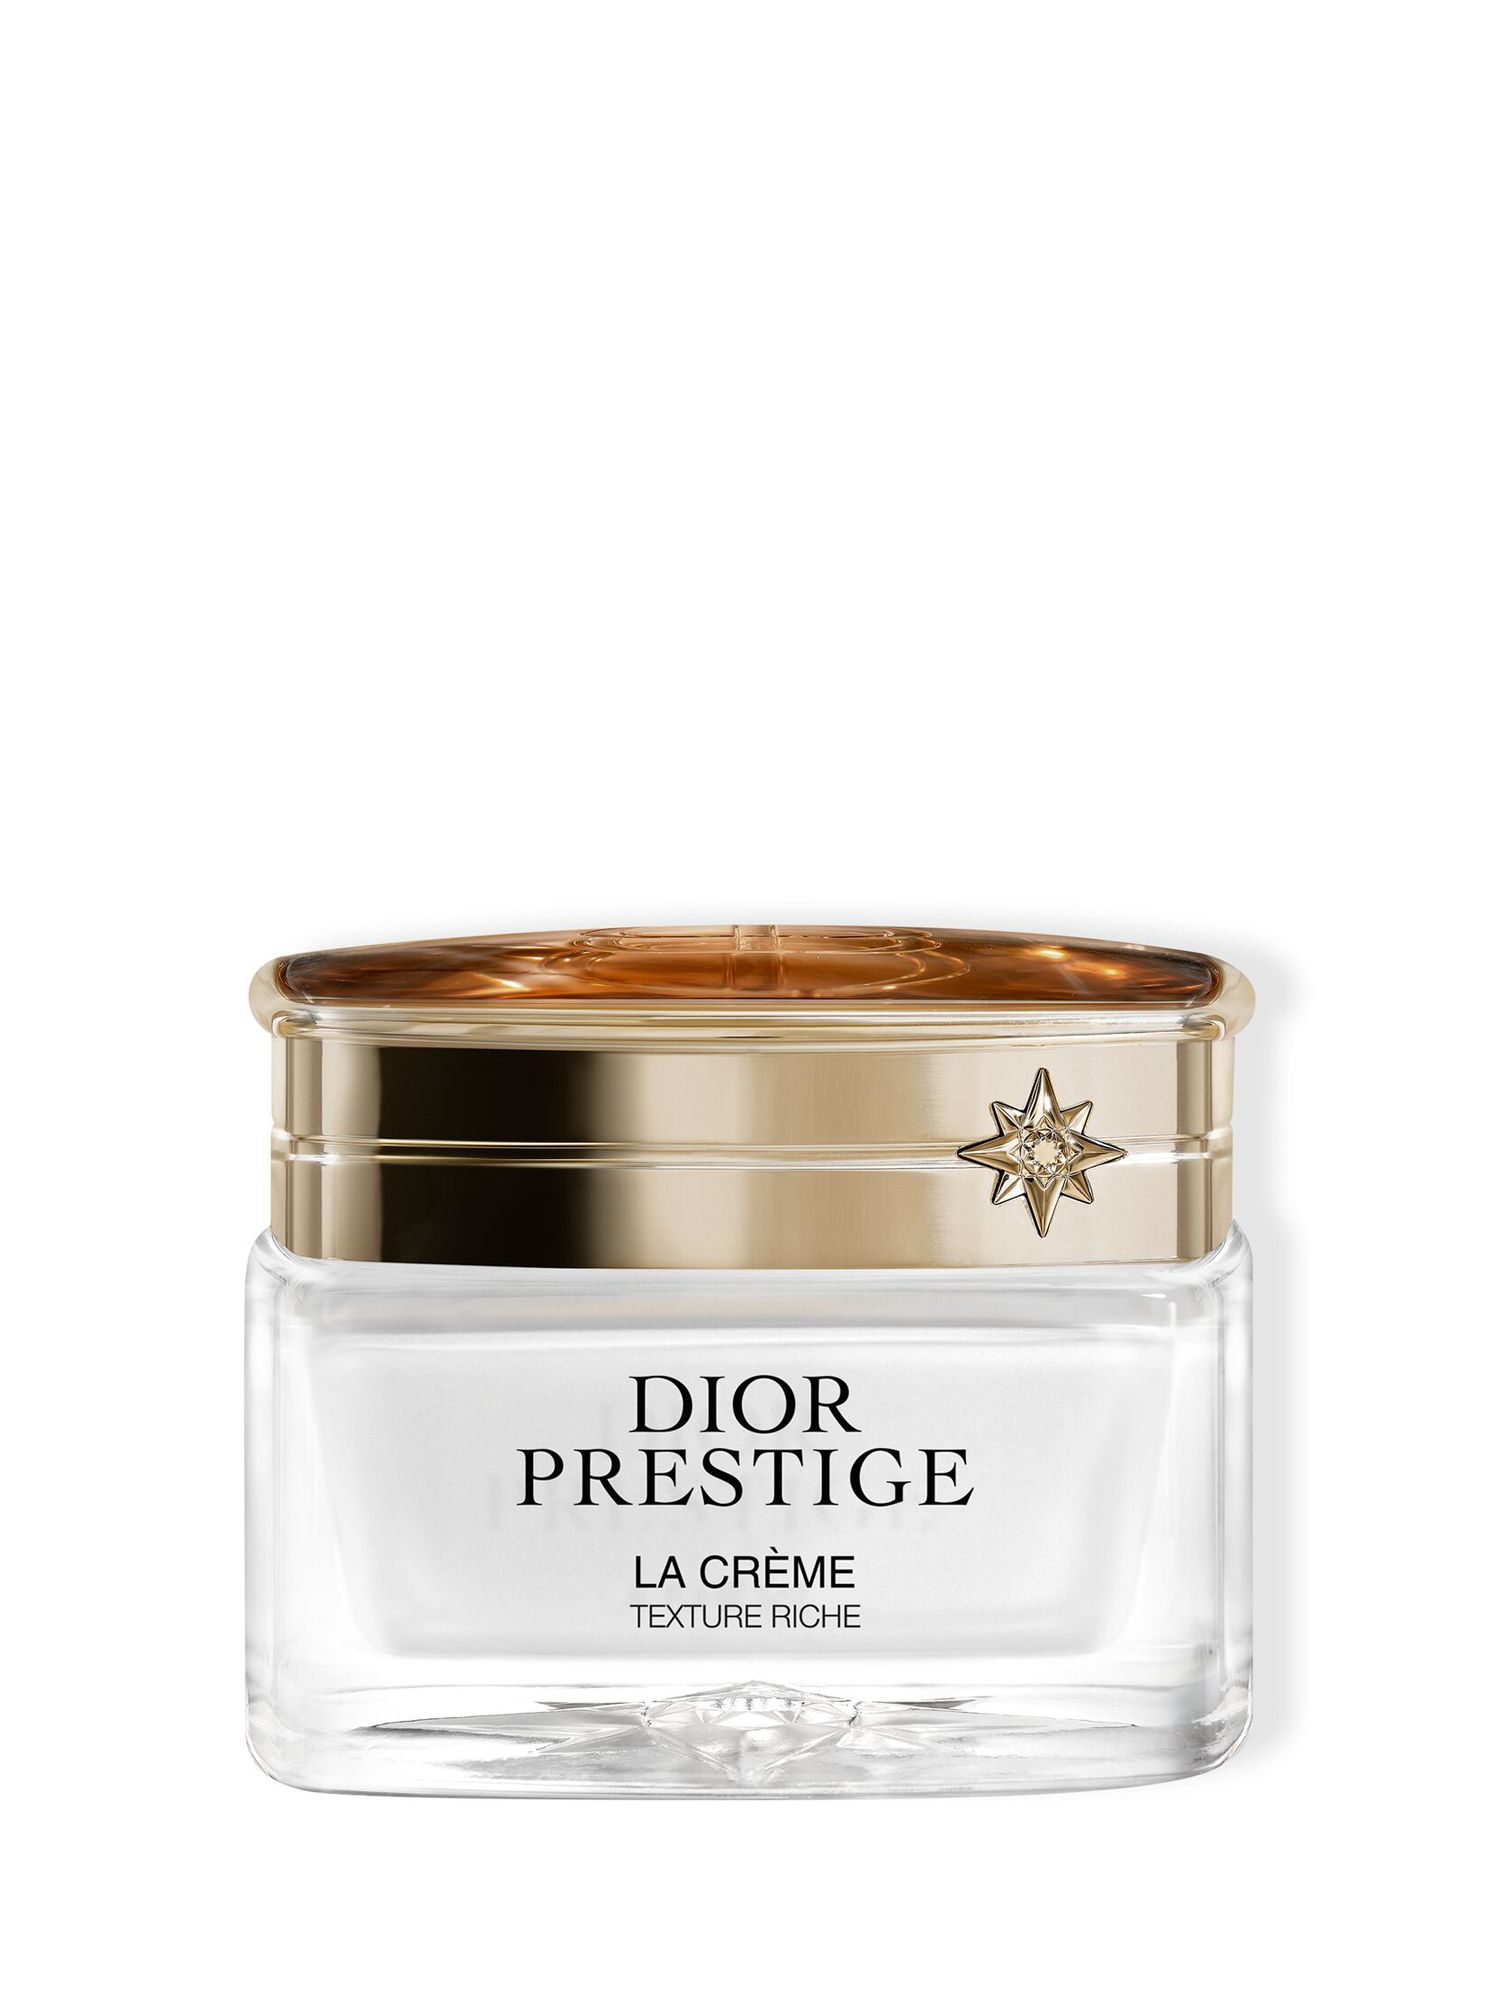 DIOR Prestige La Crème Texture Riche Jar, 50ml 1